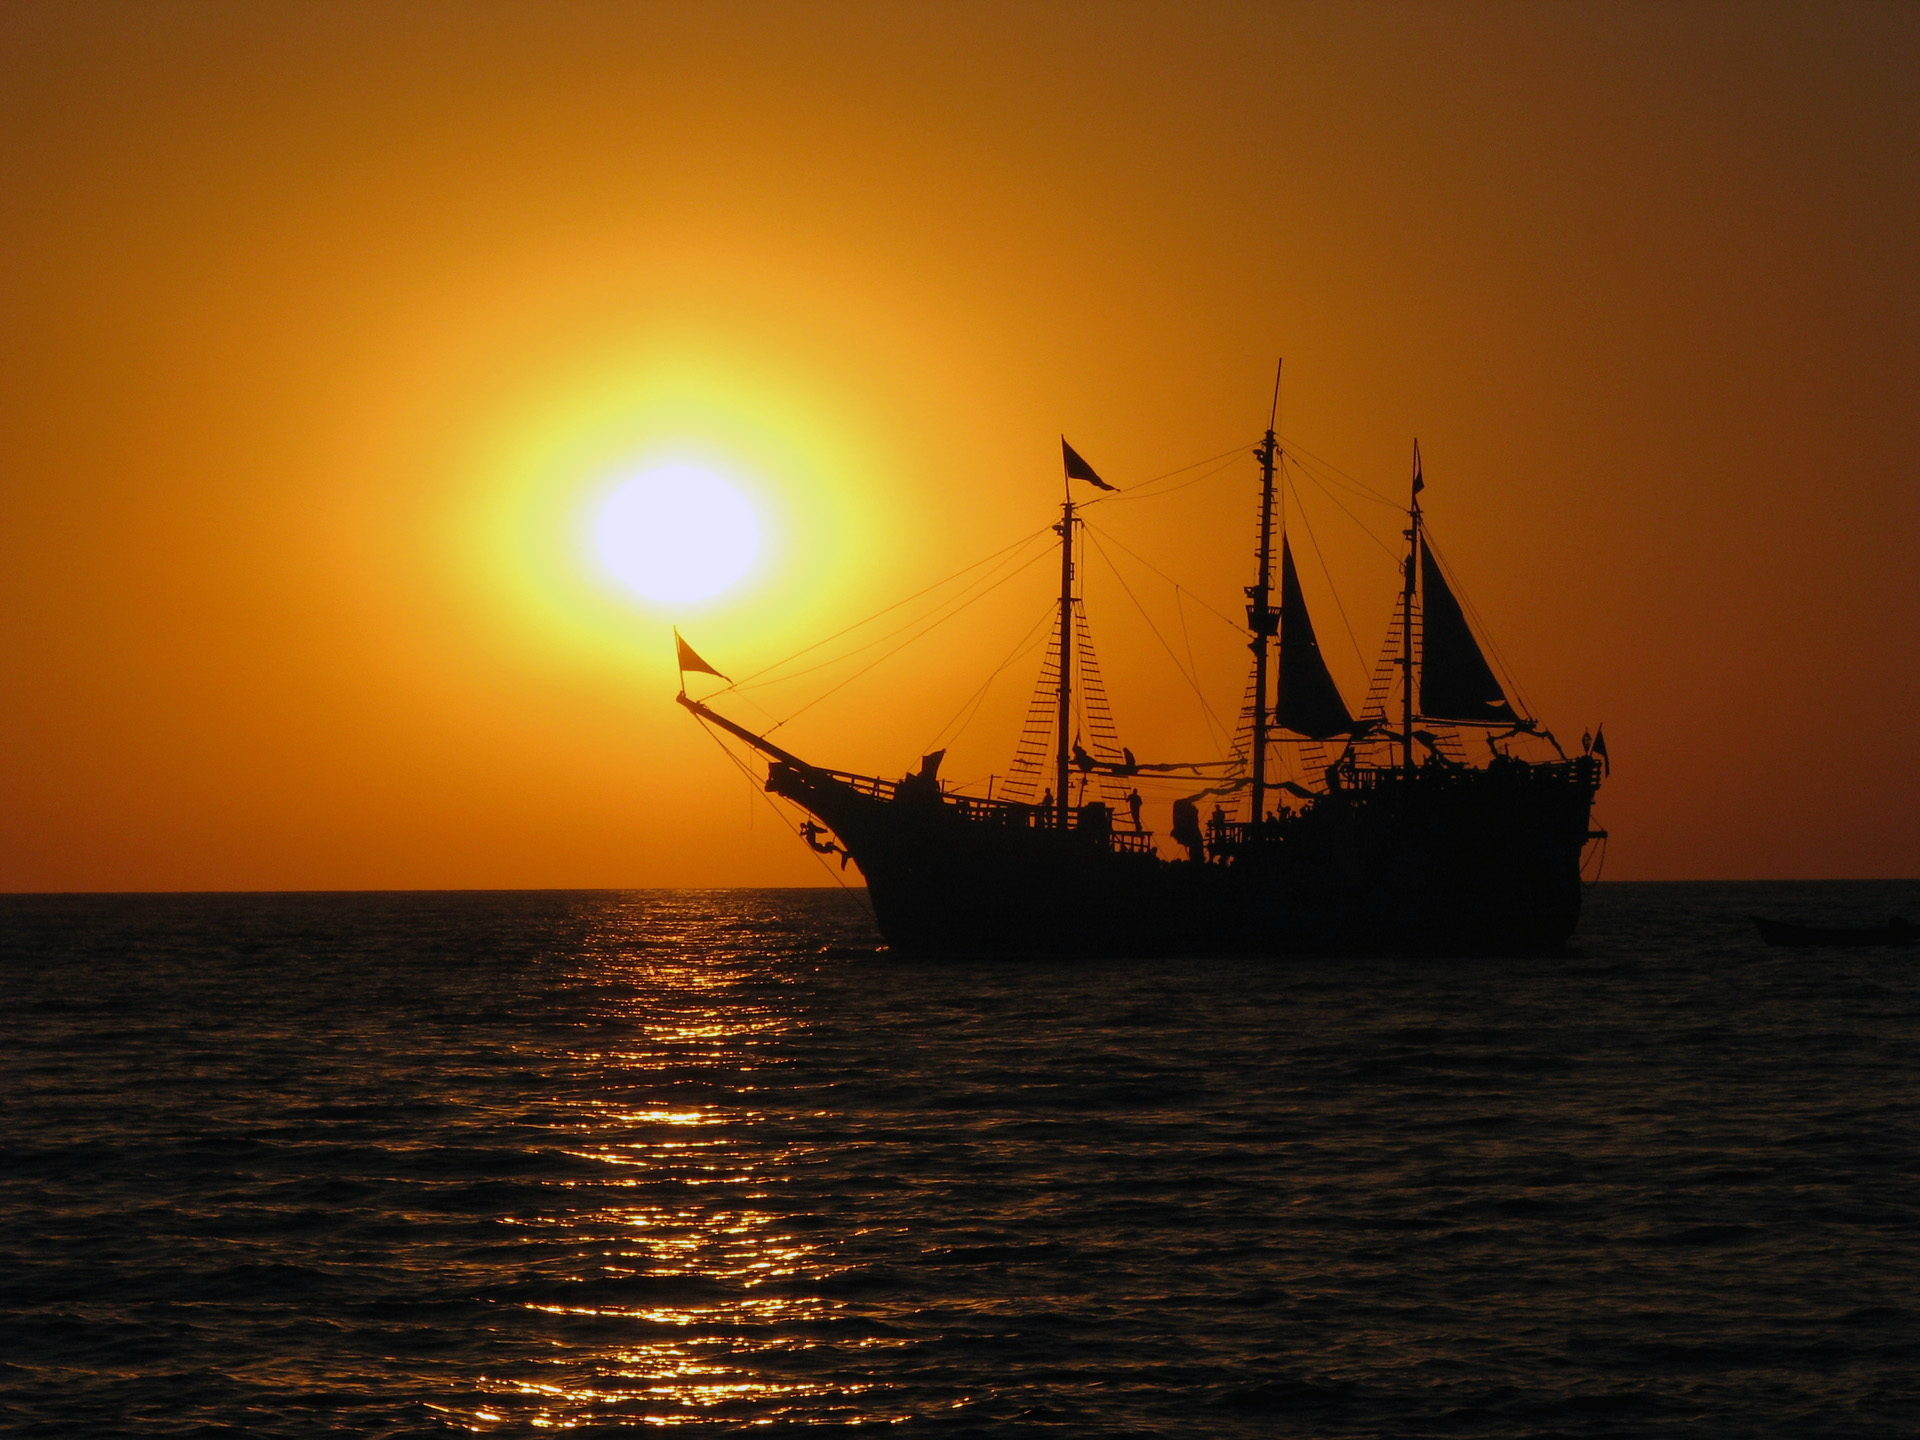 Battle Tactics on a Pirate Ship - Pirate Ship Vallarta - Blog